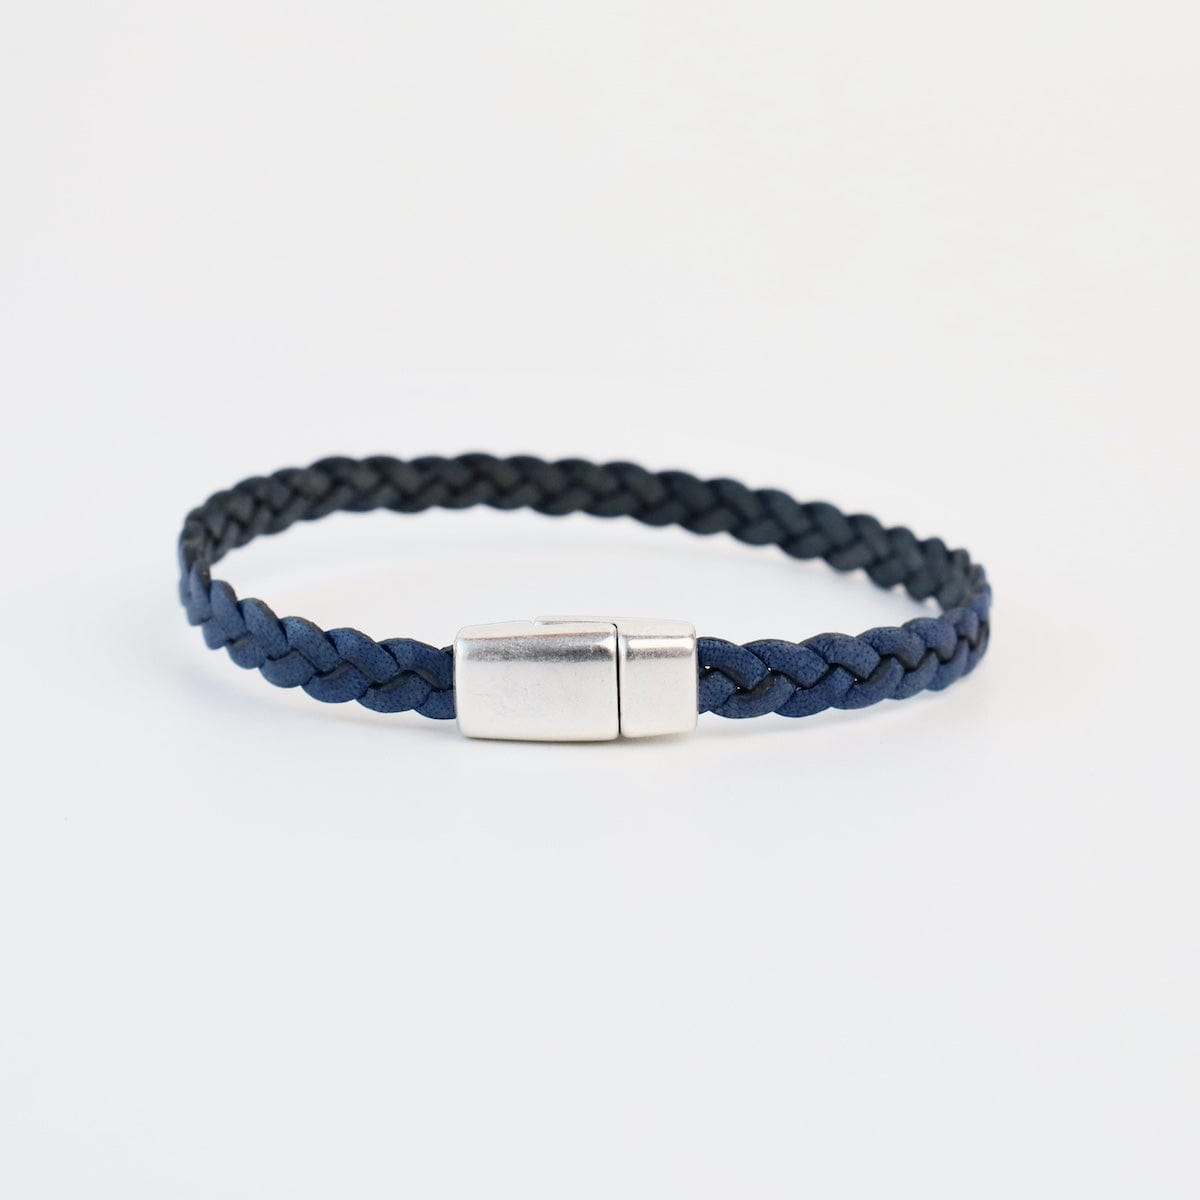 BRC Braided Blue Leather Bracelet - approx 7.5"